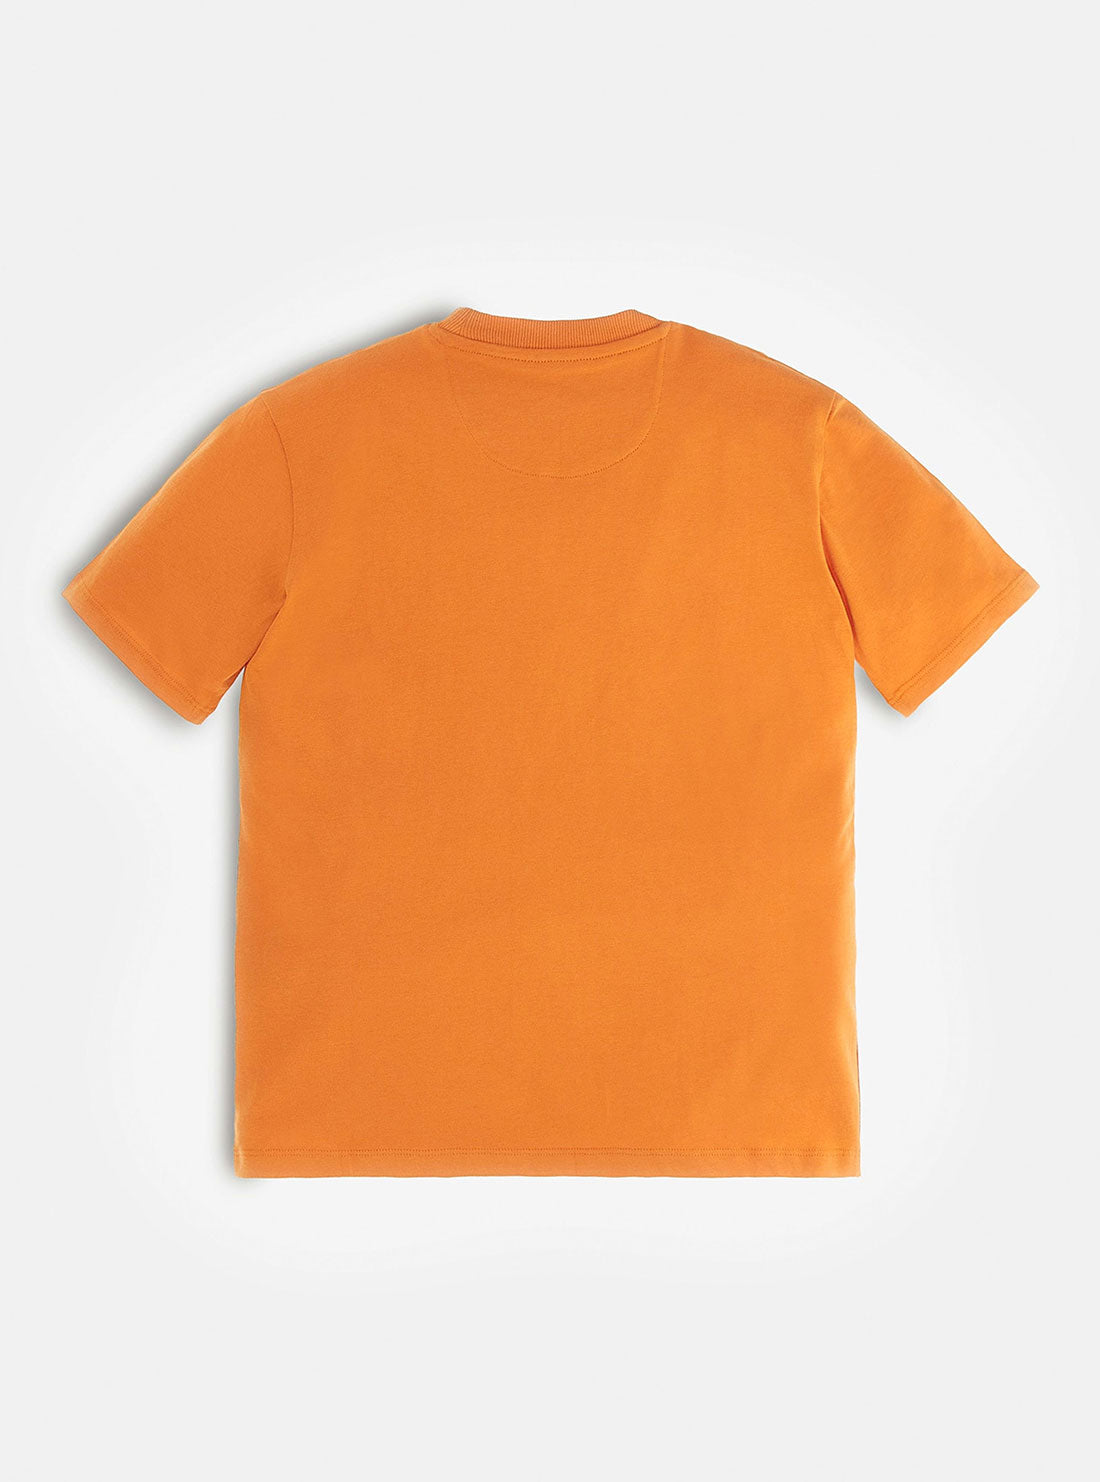 Boy's Orange Triangle Logo T-Shirt back view